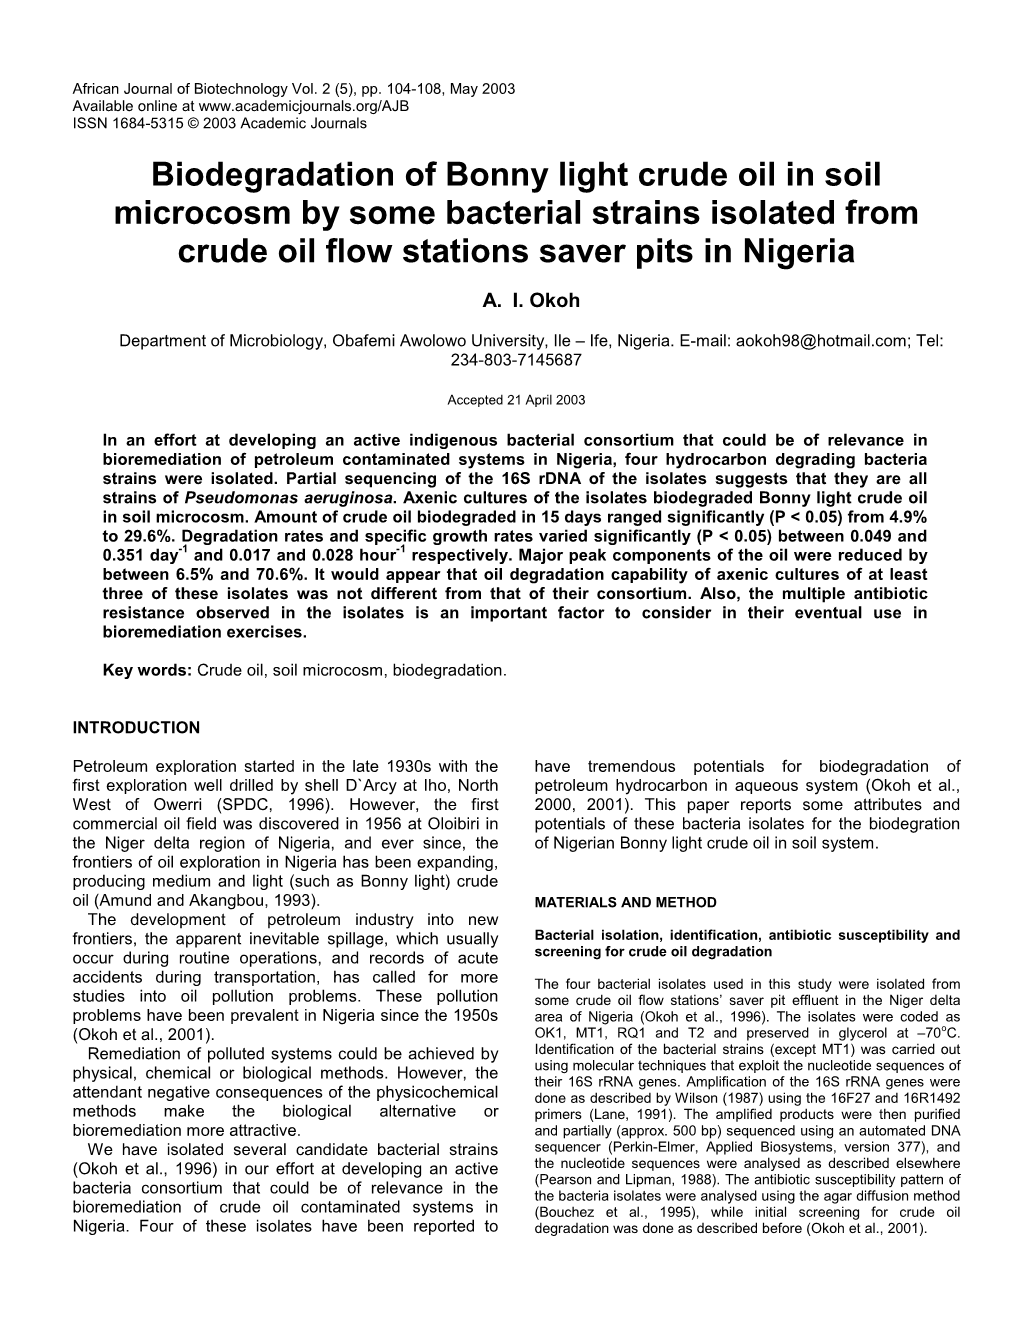 Biodegradation Bonny Light Crude Oil in Soil Microcosm